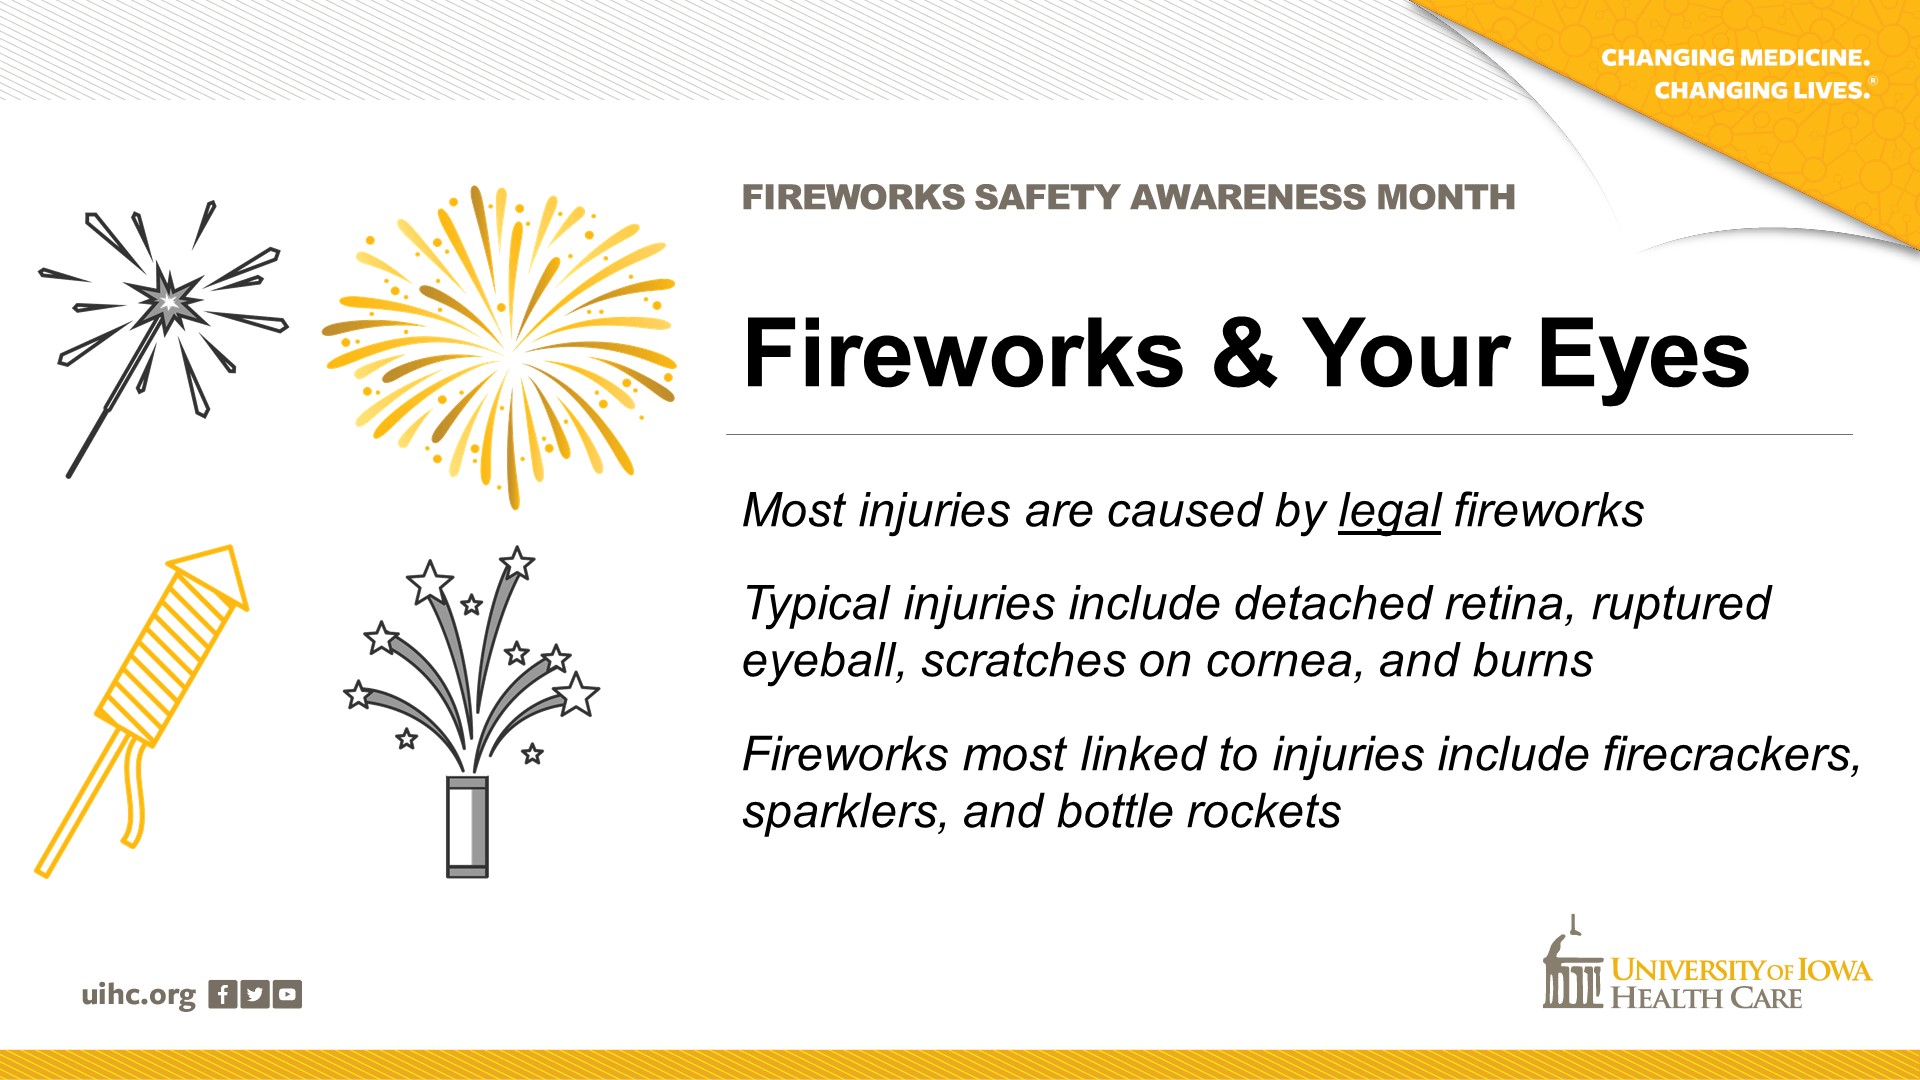 Fireworks safety